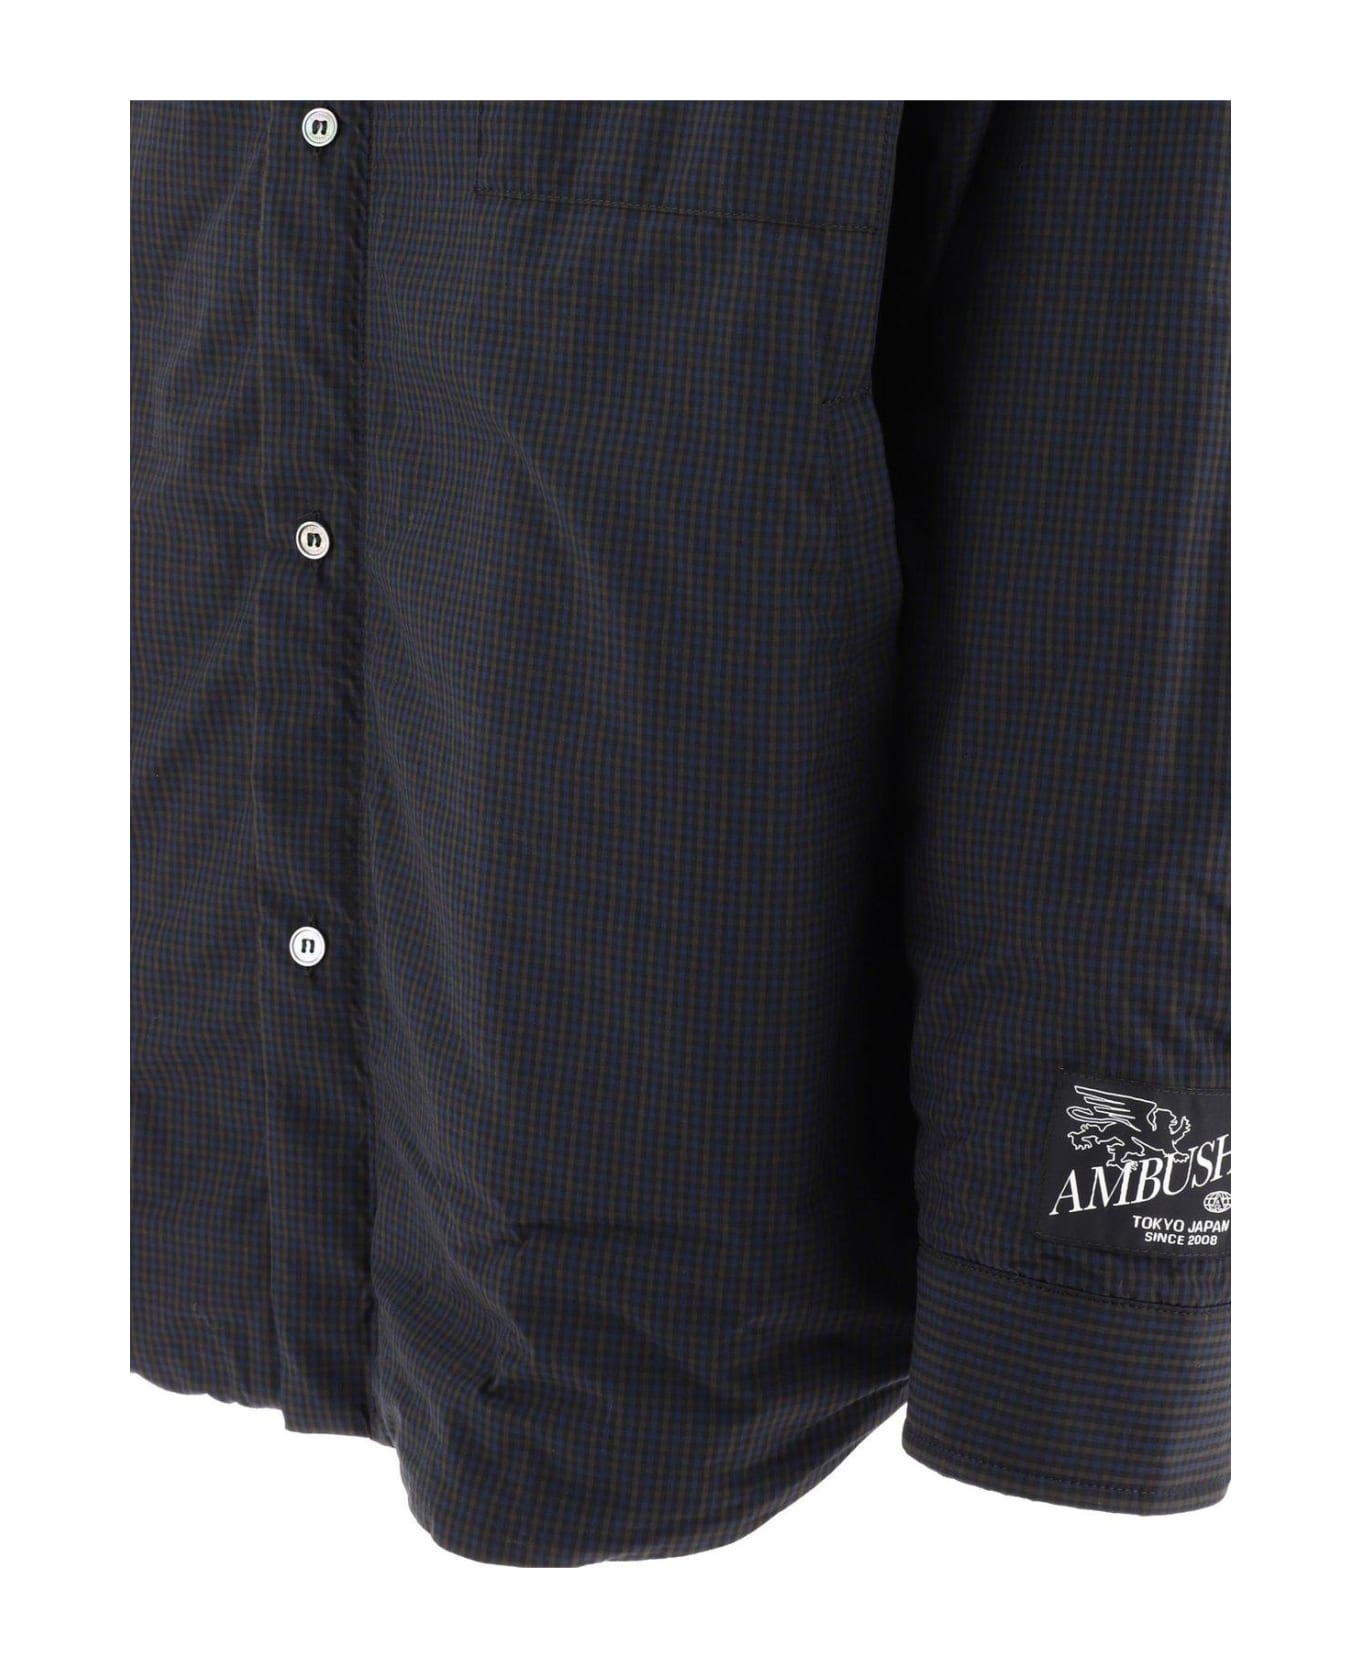 AMBUSH Buttoned Long-sleeved Padded Shirt Jacket